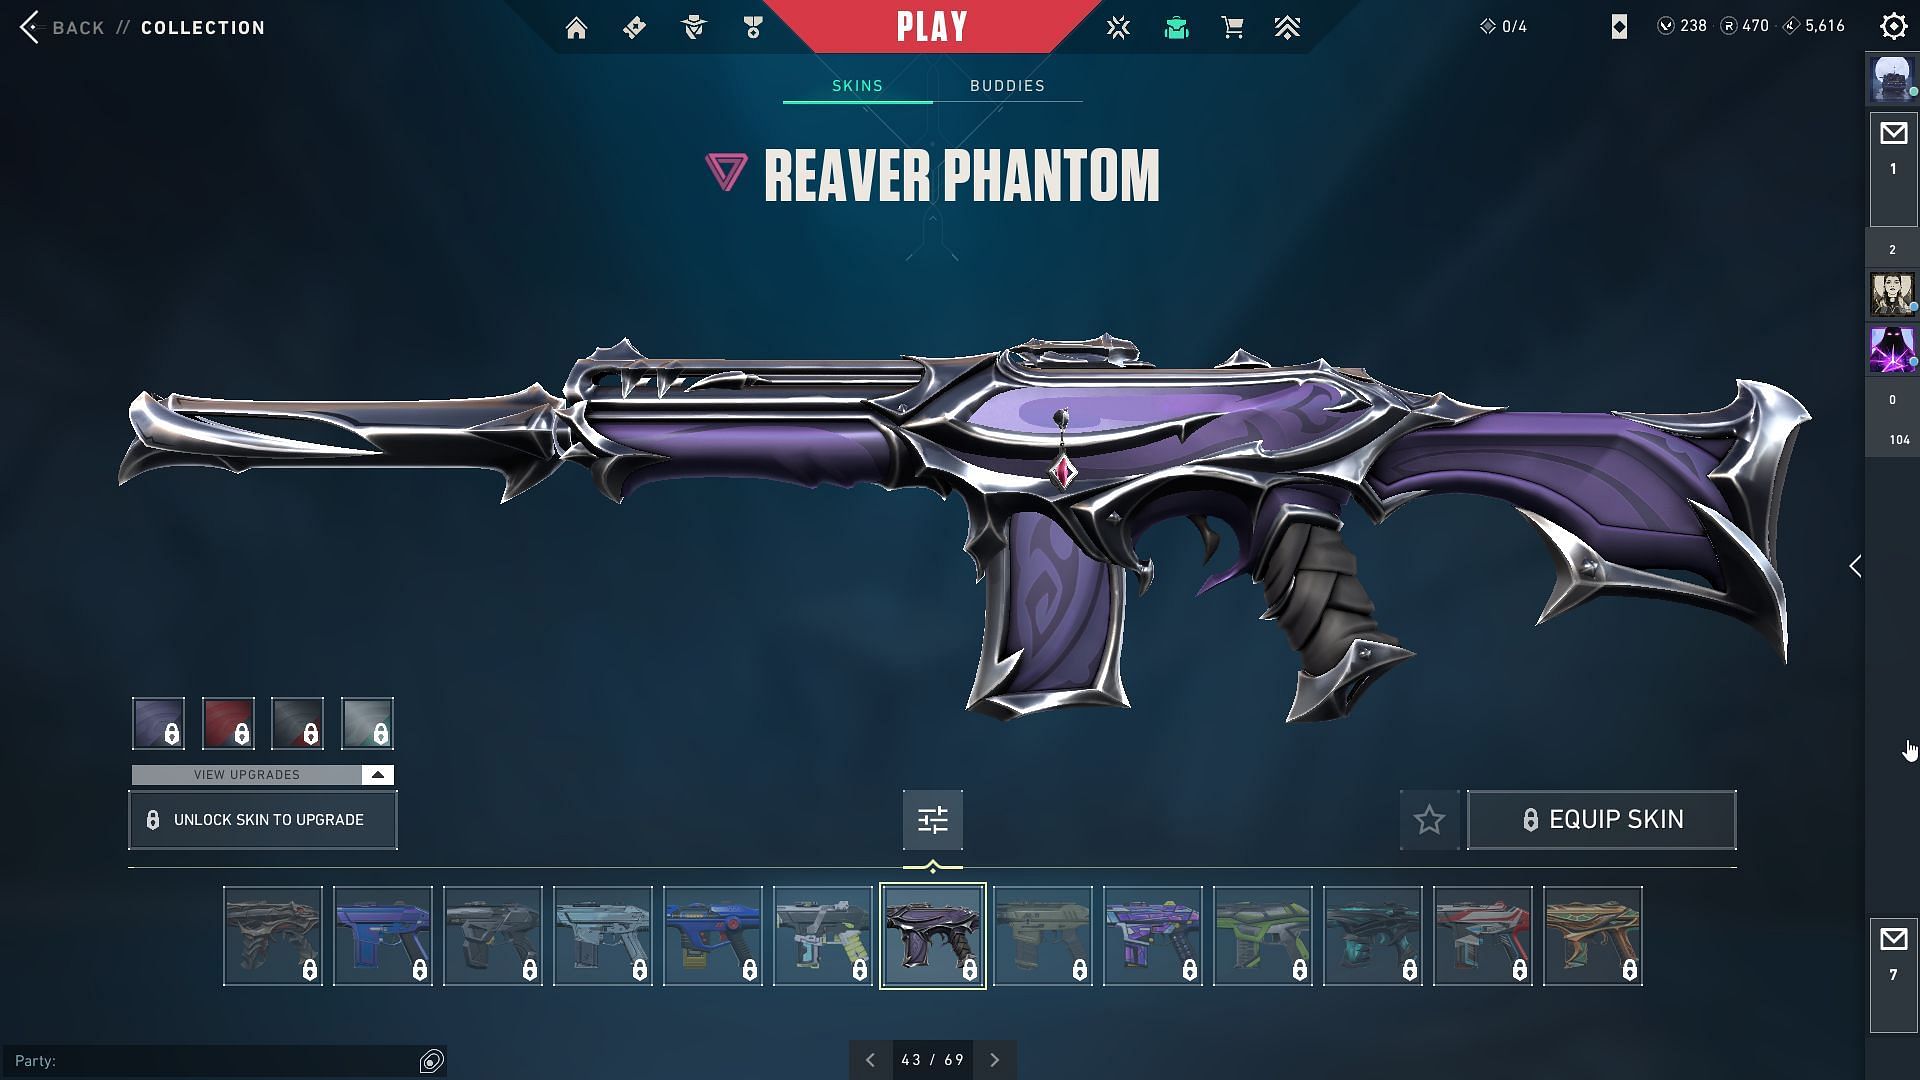 Reaver Phantom, a fan favorite skin line in the game (Image via Riot Games)